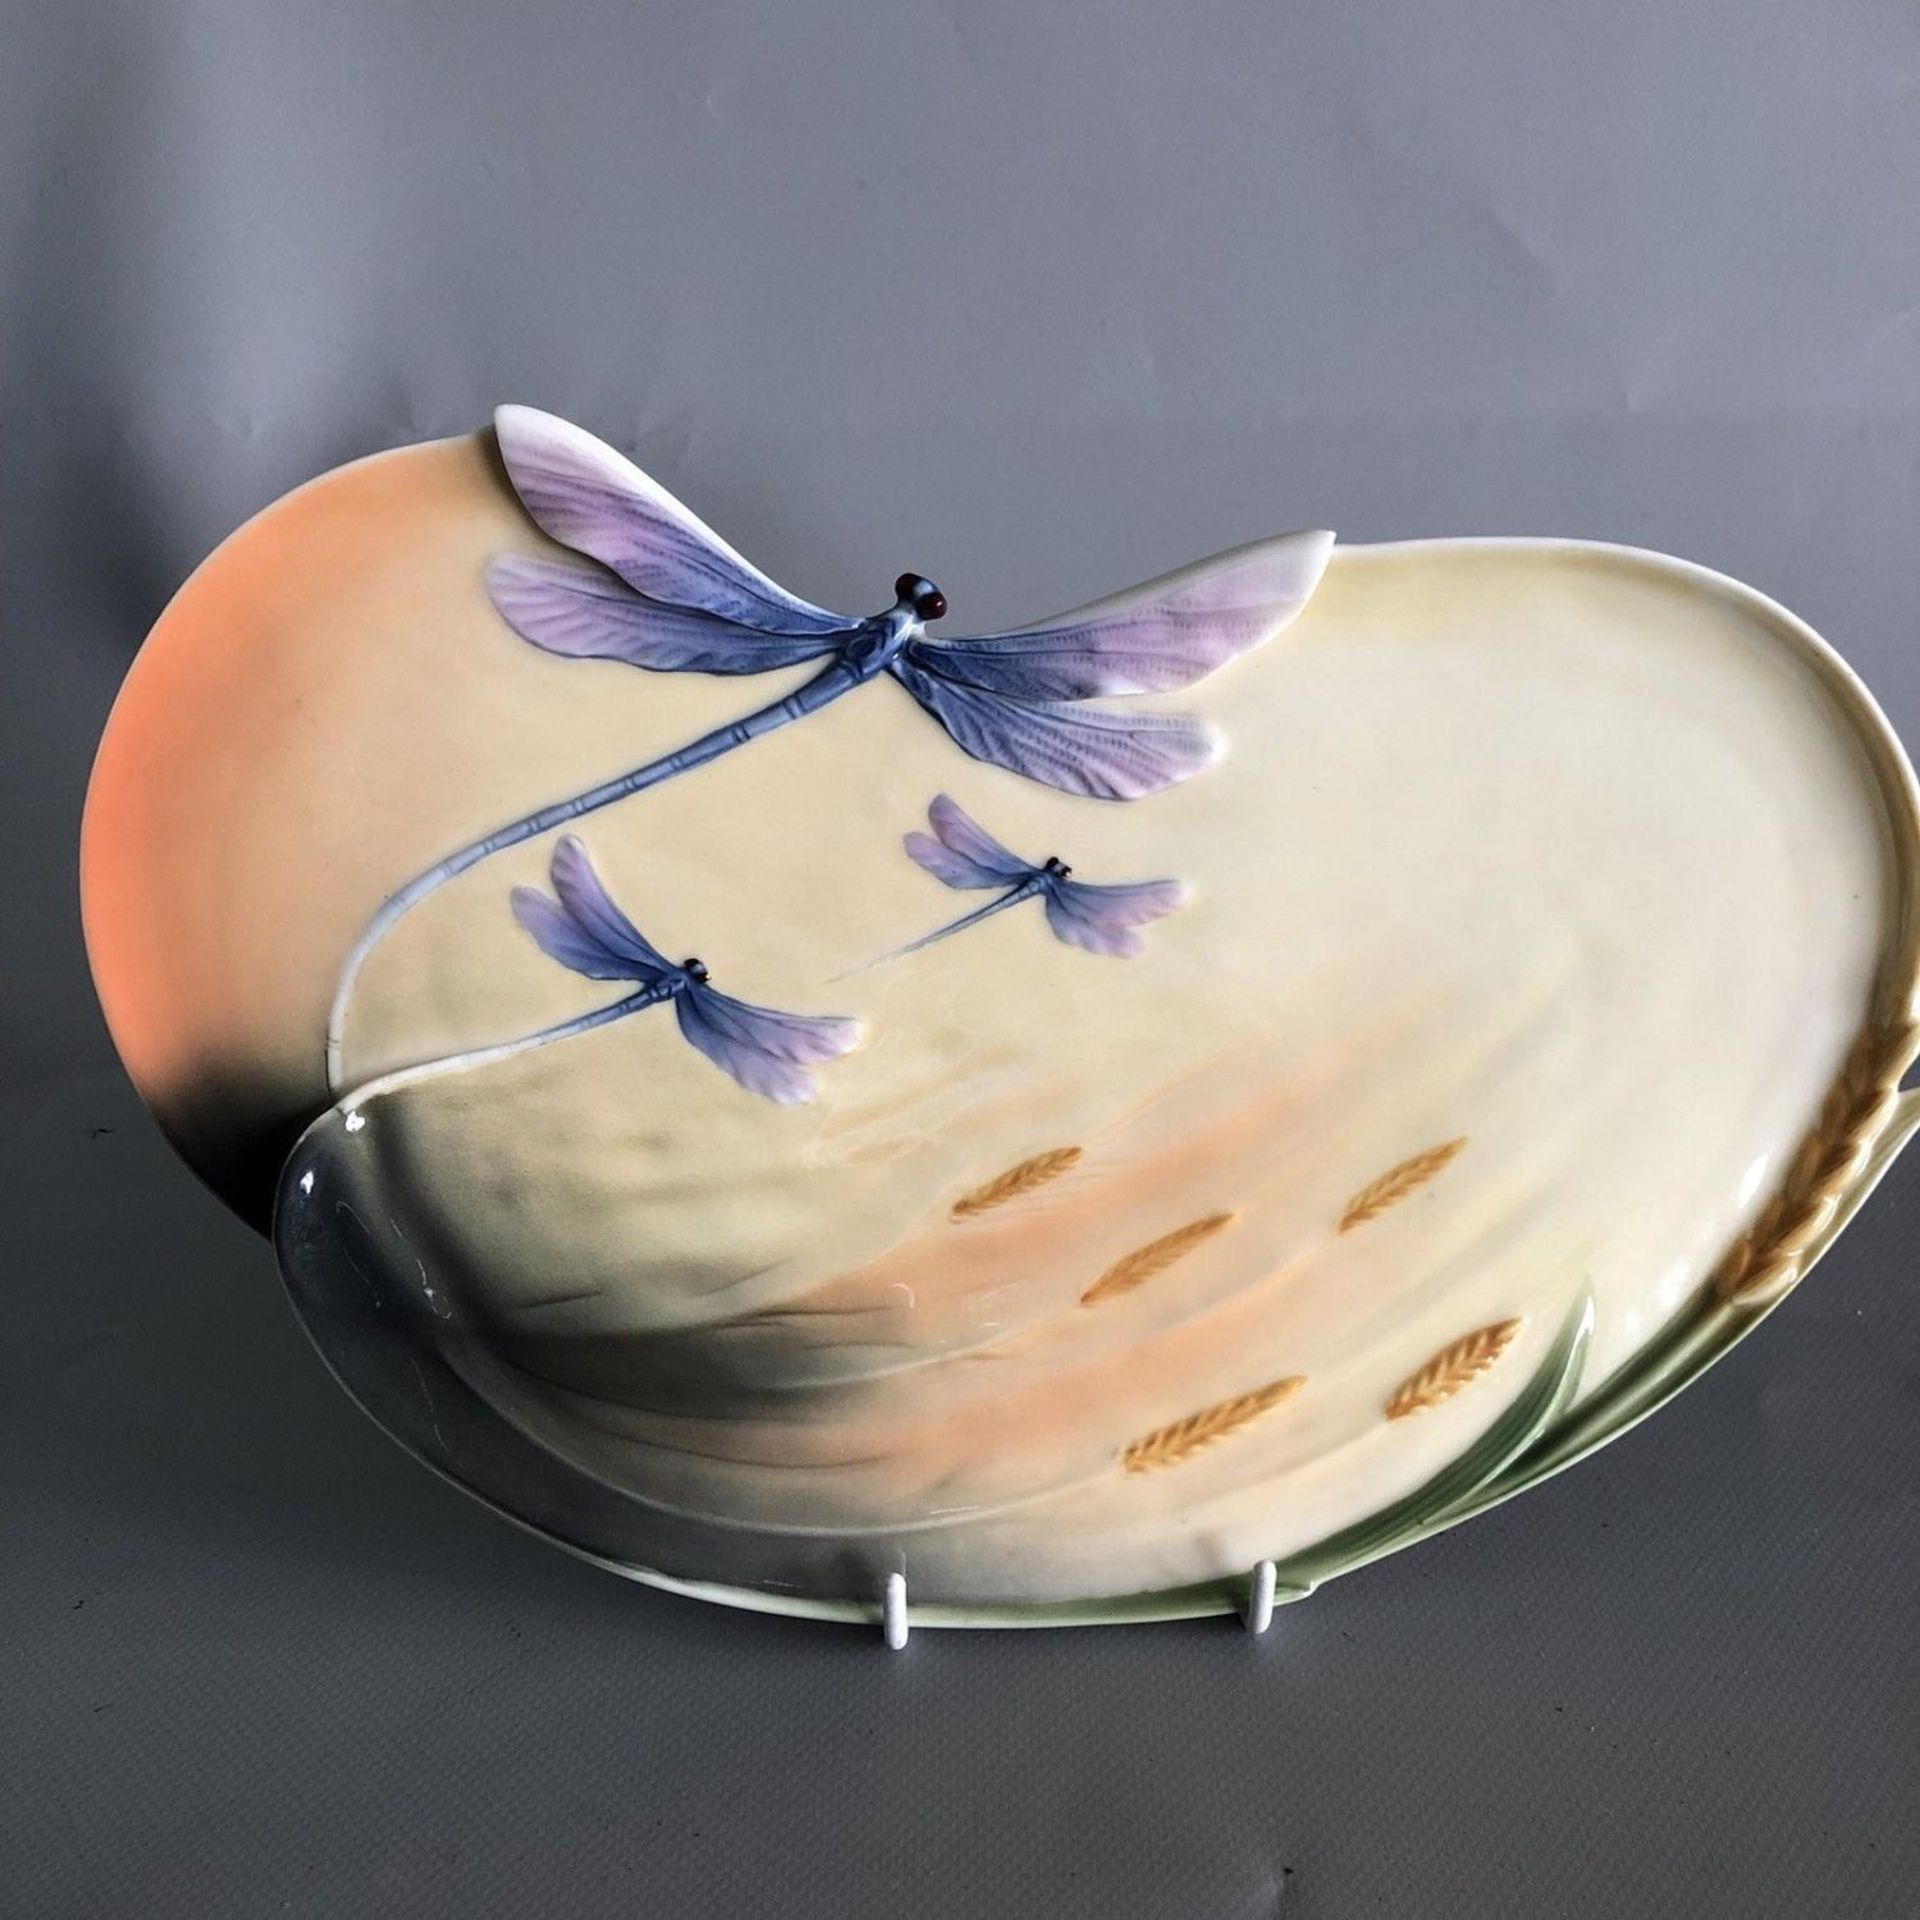 Signed Jen Woo Franz Dragonfly & Corn Wheat Decoration Porcelain Sandwich Plate - Image 4 of 5